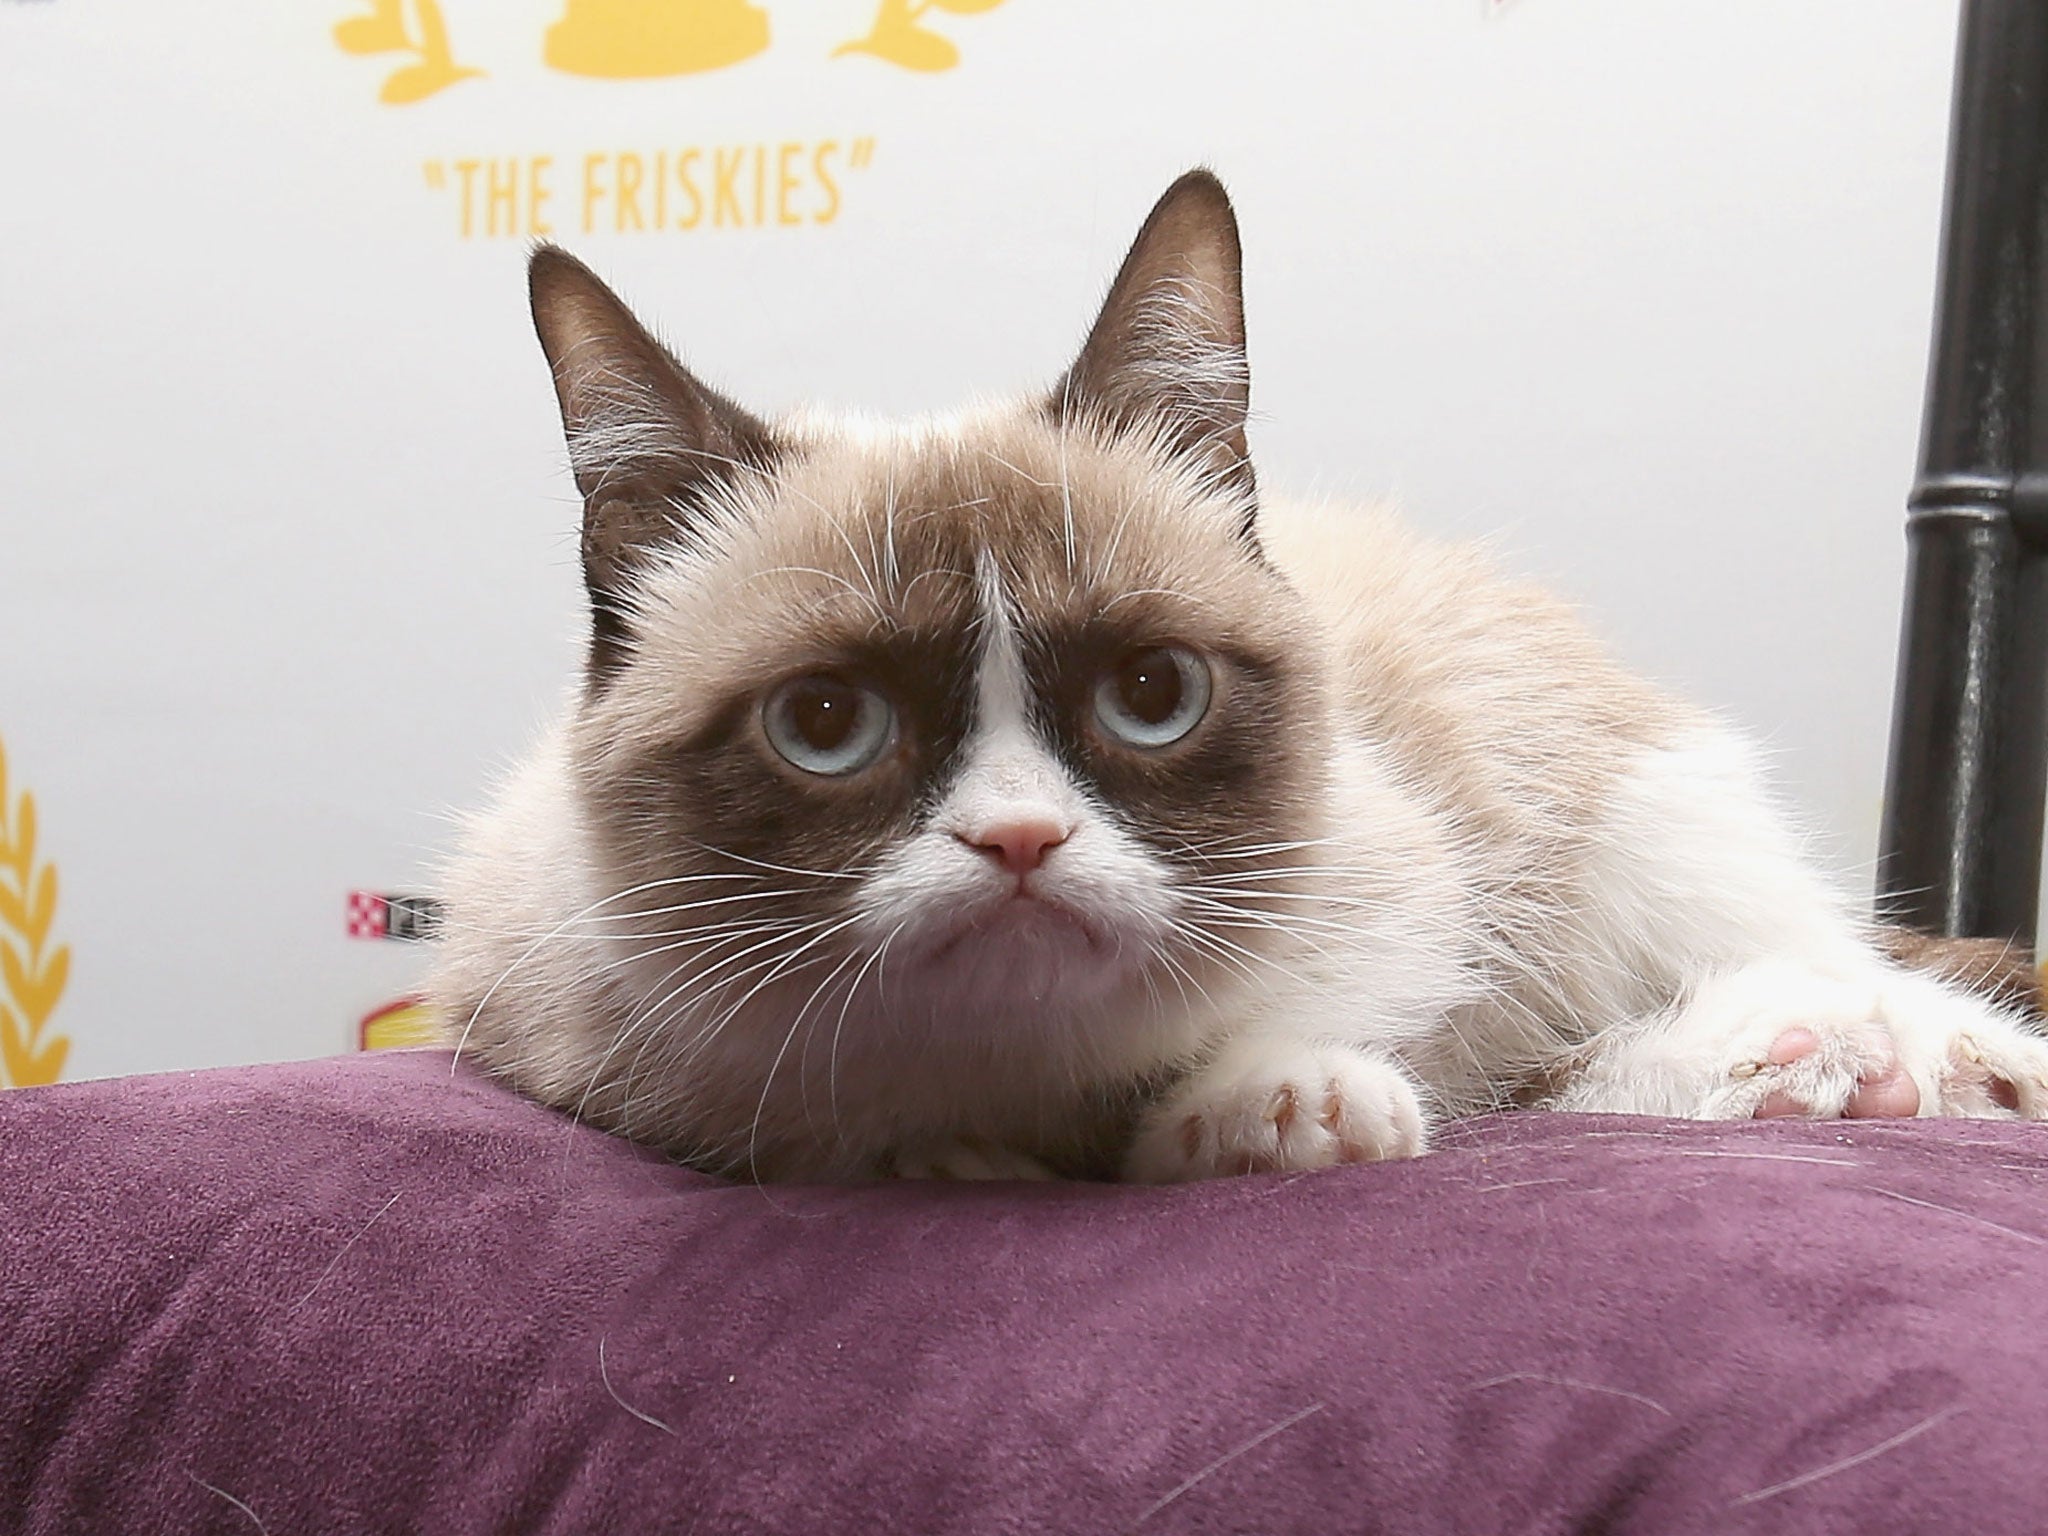 Grumpy Cat poses on a purple pillow